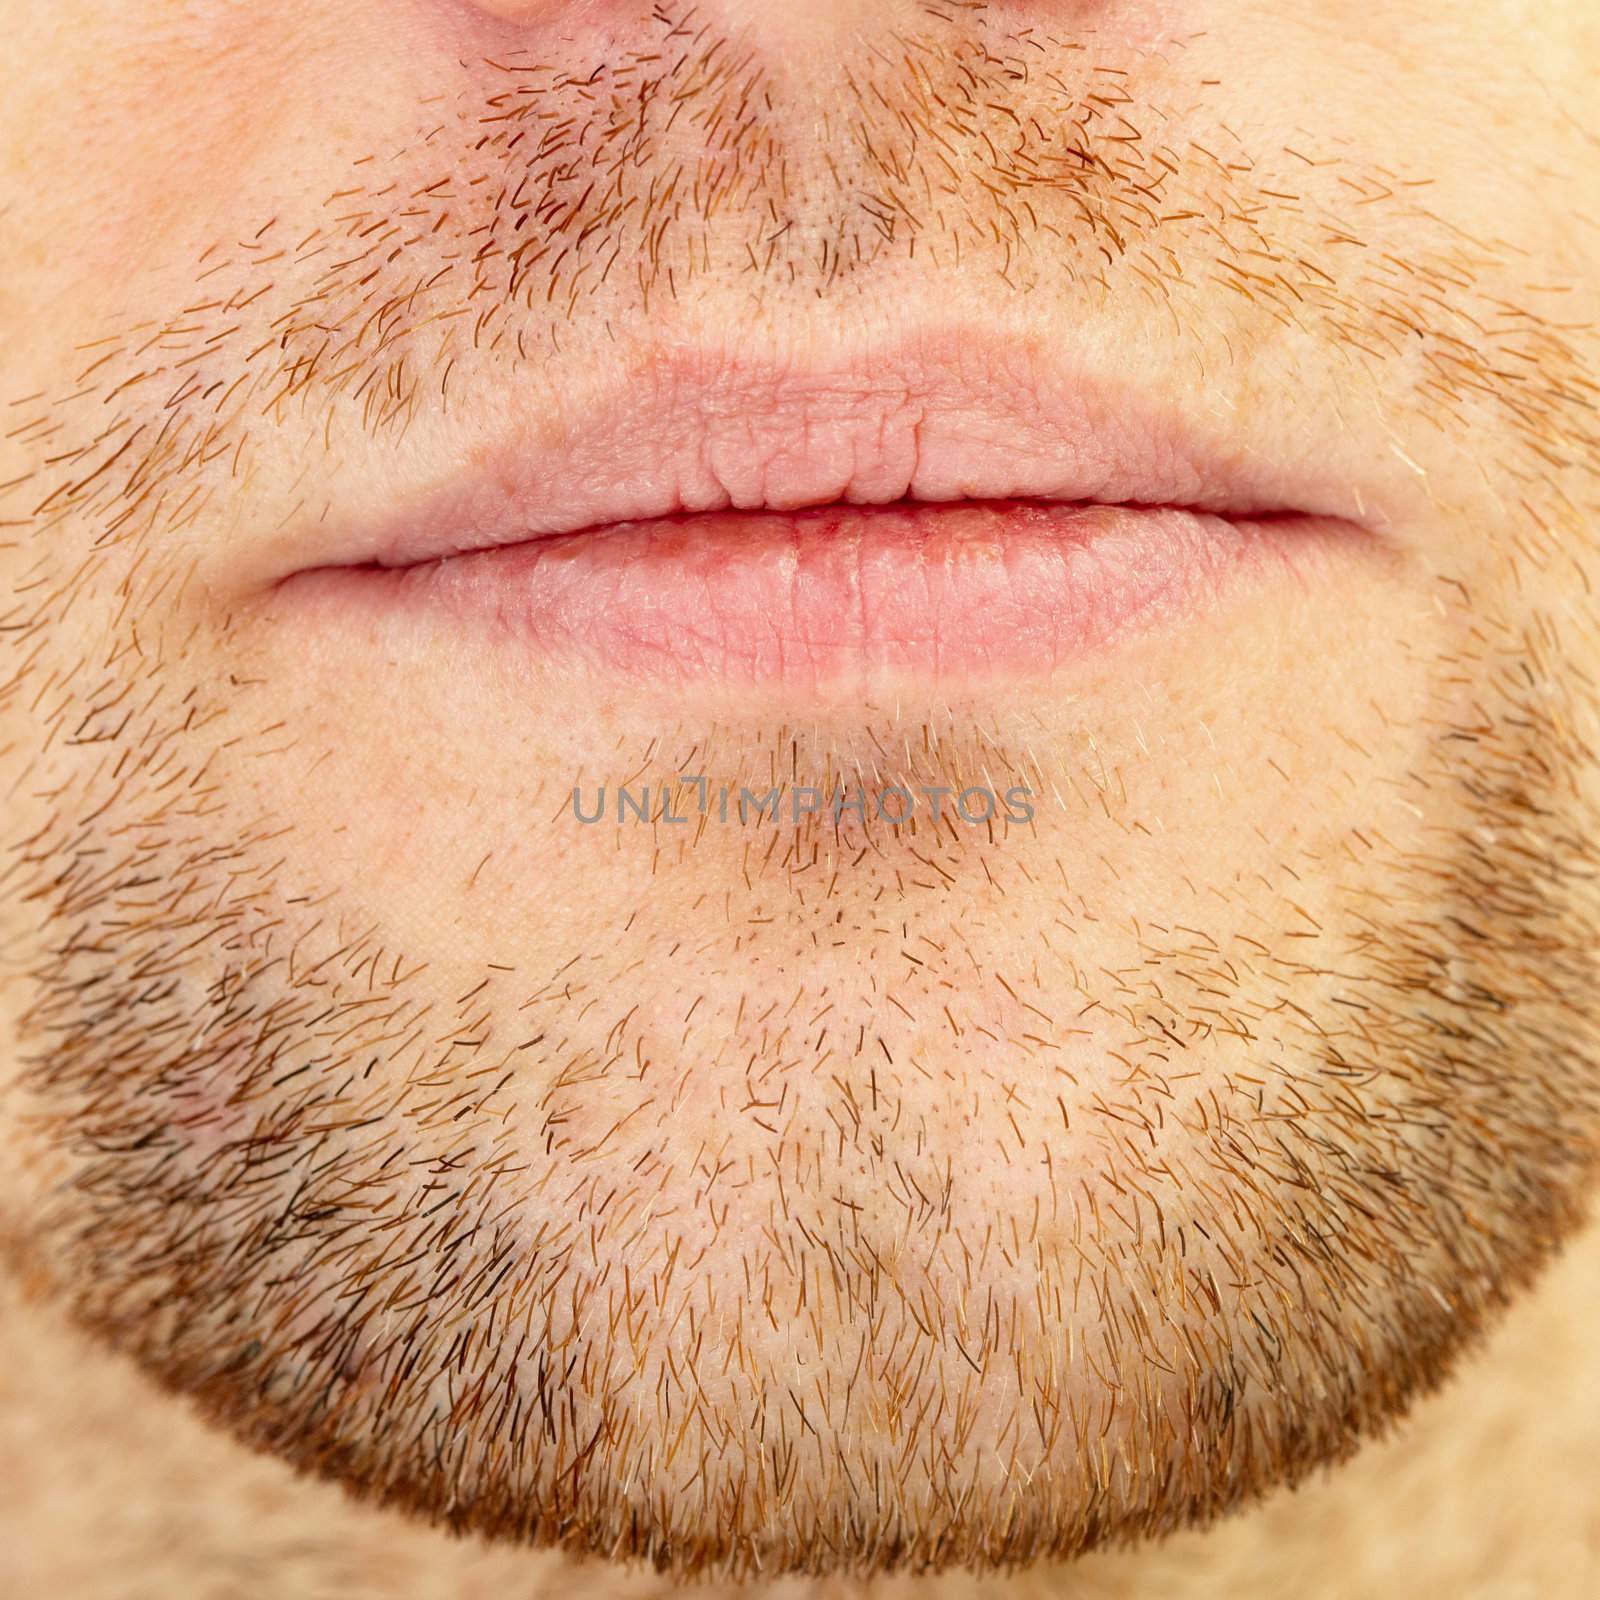 Men's short beard and lips close up